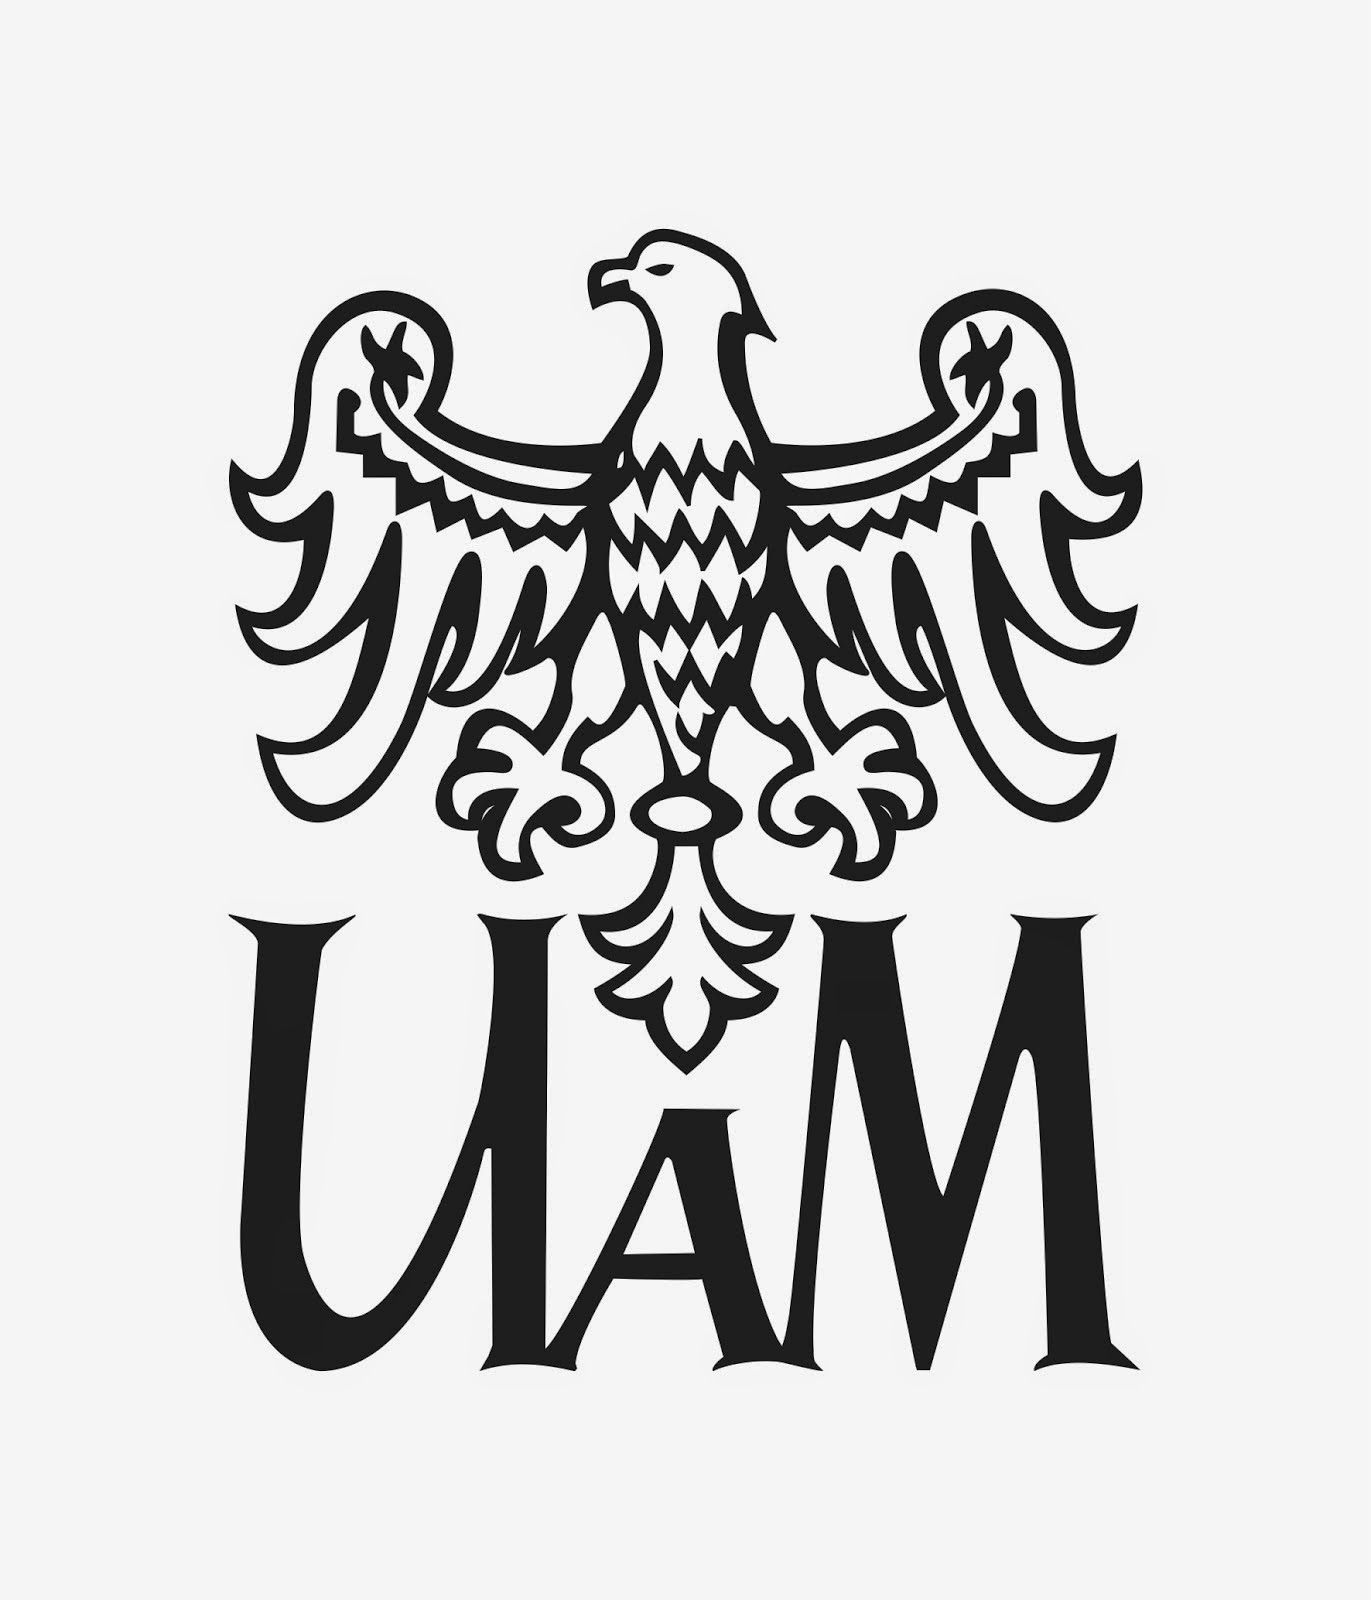 <a href="https://amu.edu.pl/">Uniwersytet im. Adama Mickiewicza</a>